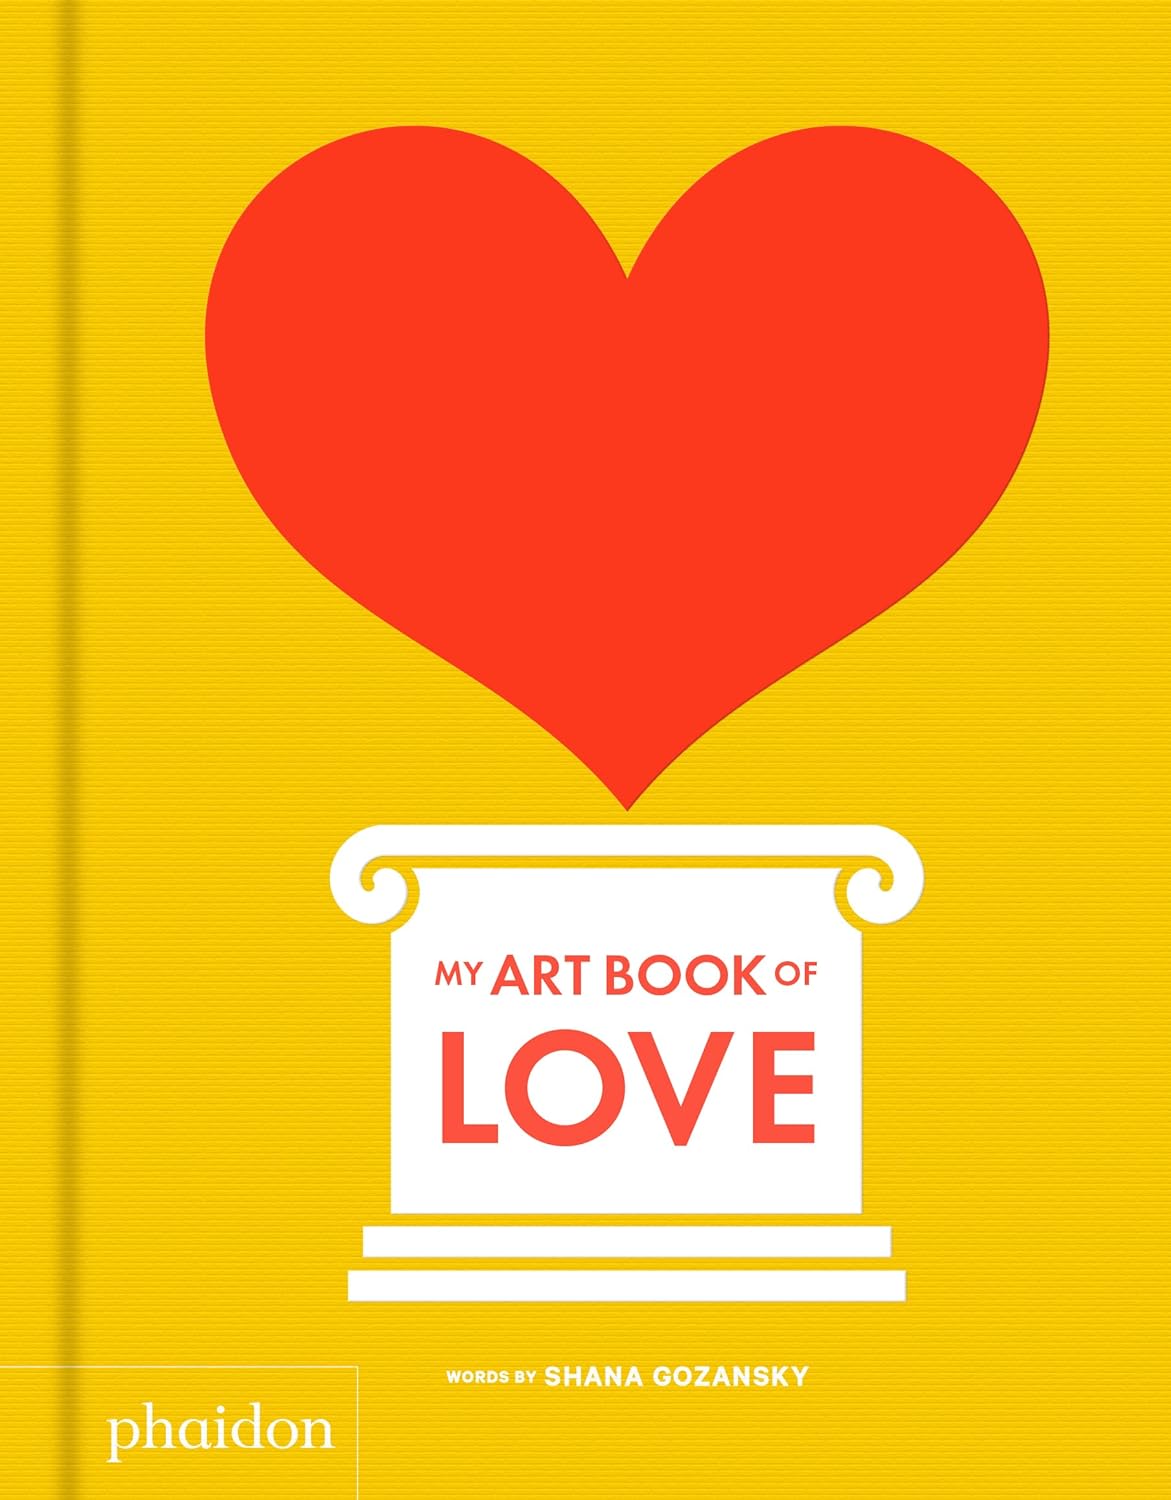 My Art Book of Love by Phaidon Press